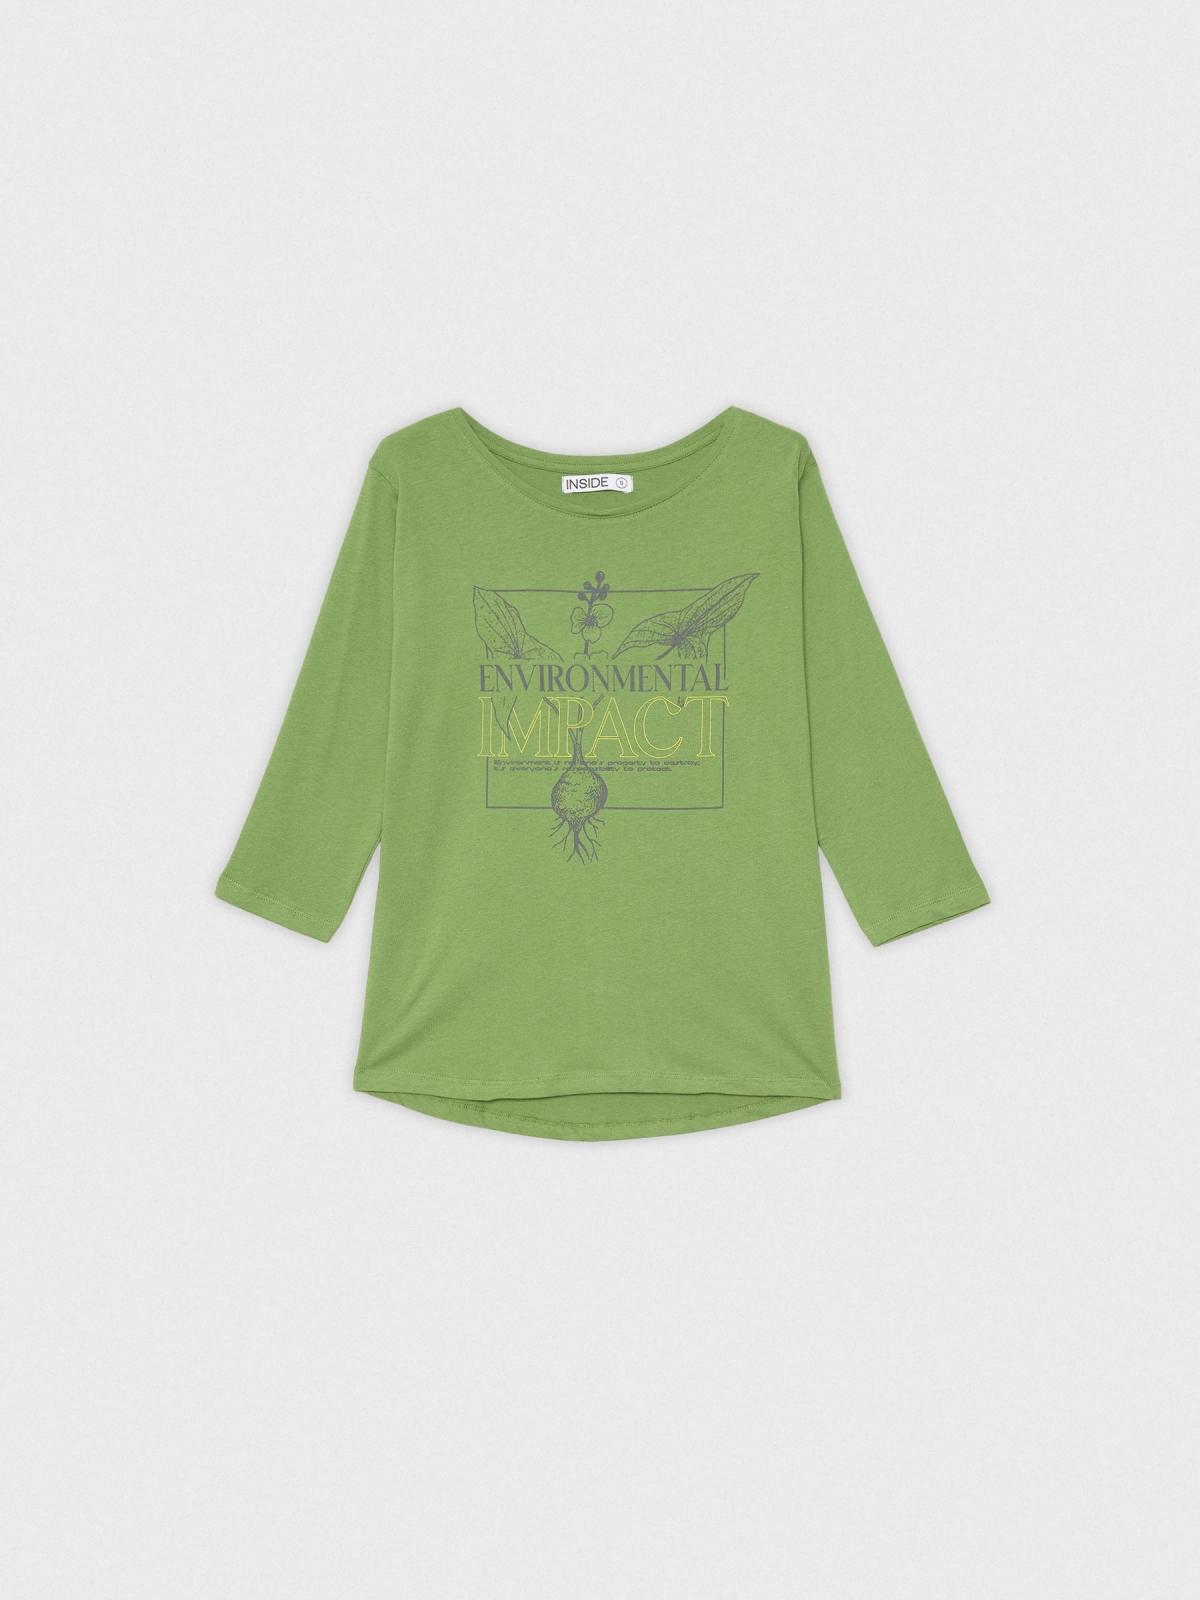  Camiseta Environmental verde oliva